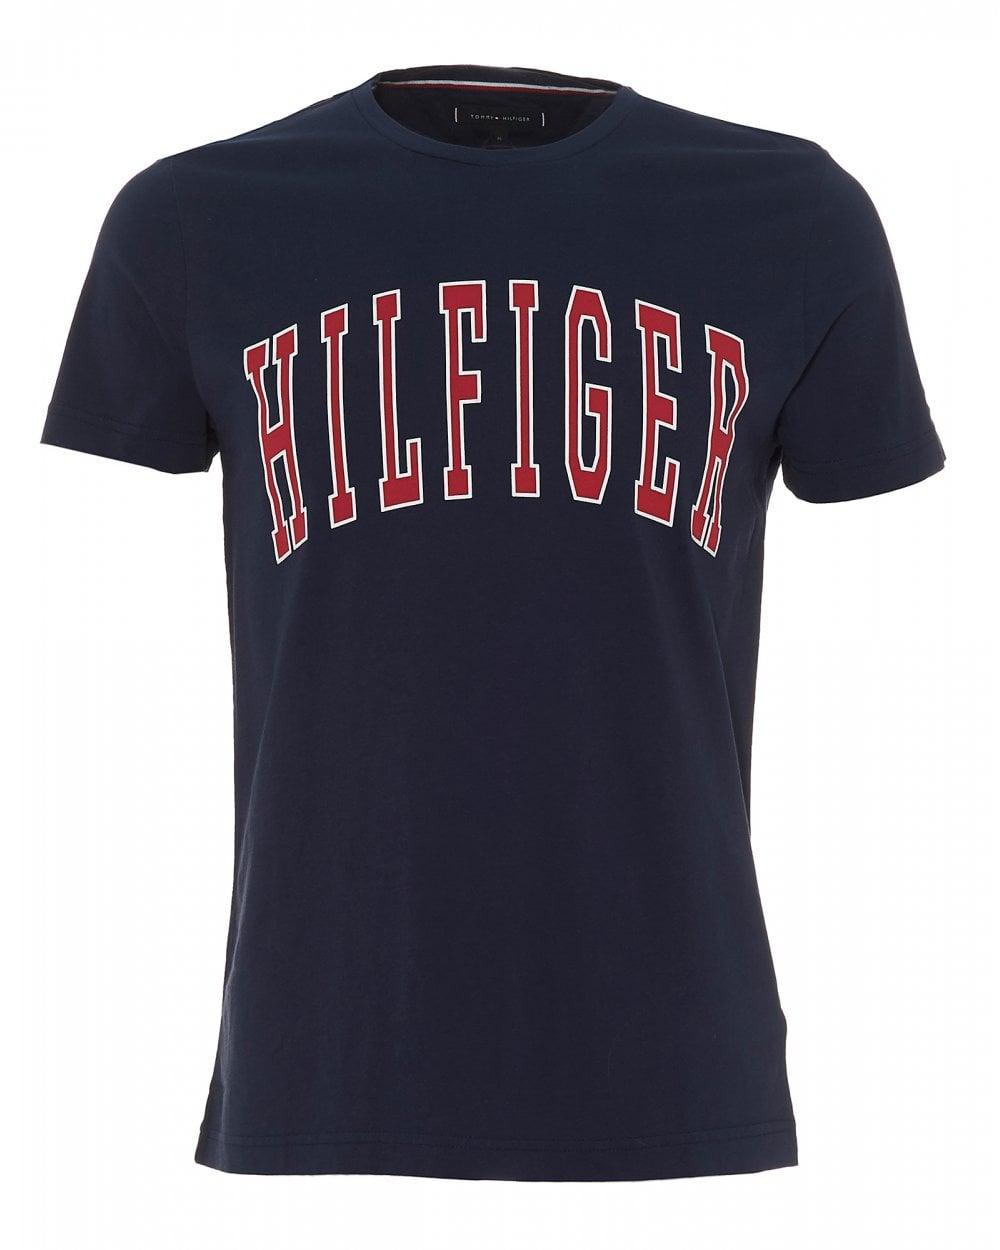 Tommy Hilfiger Black Logo - Tommy Hilfiger Mens Retro College Logo T Shirt, Black Iris Tee